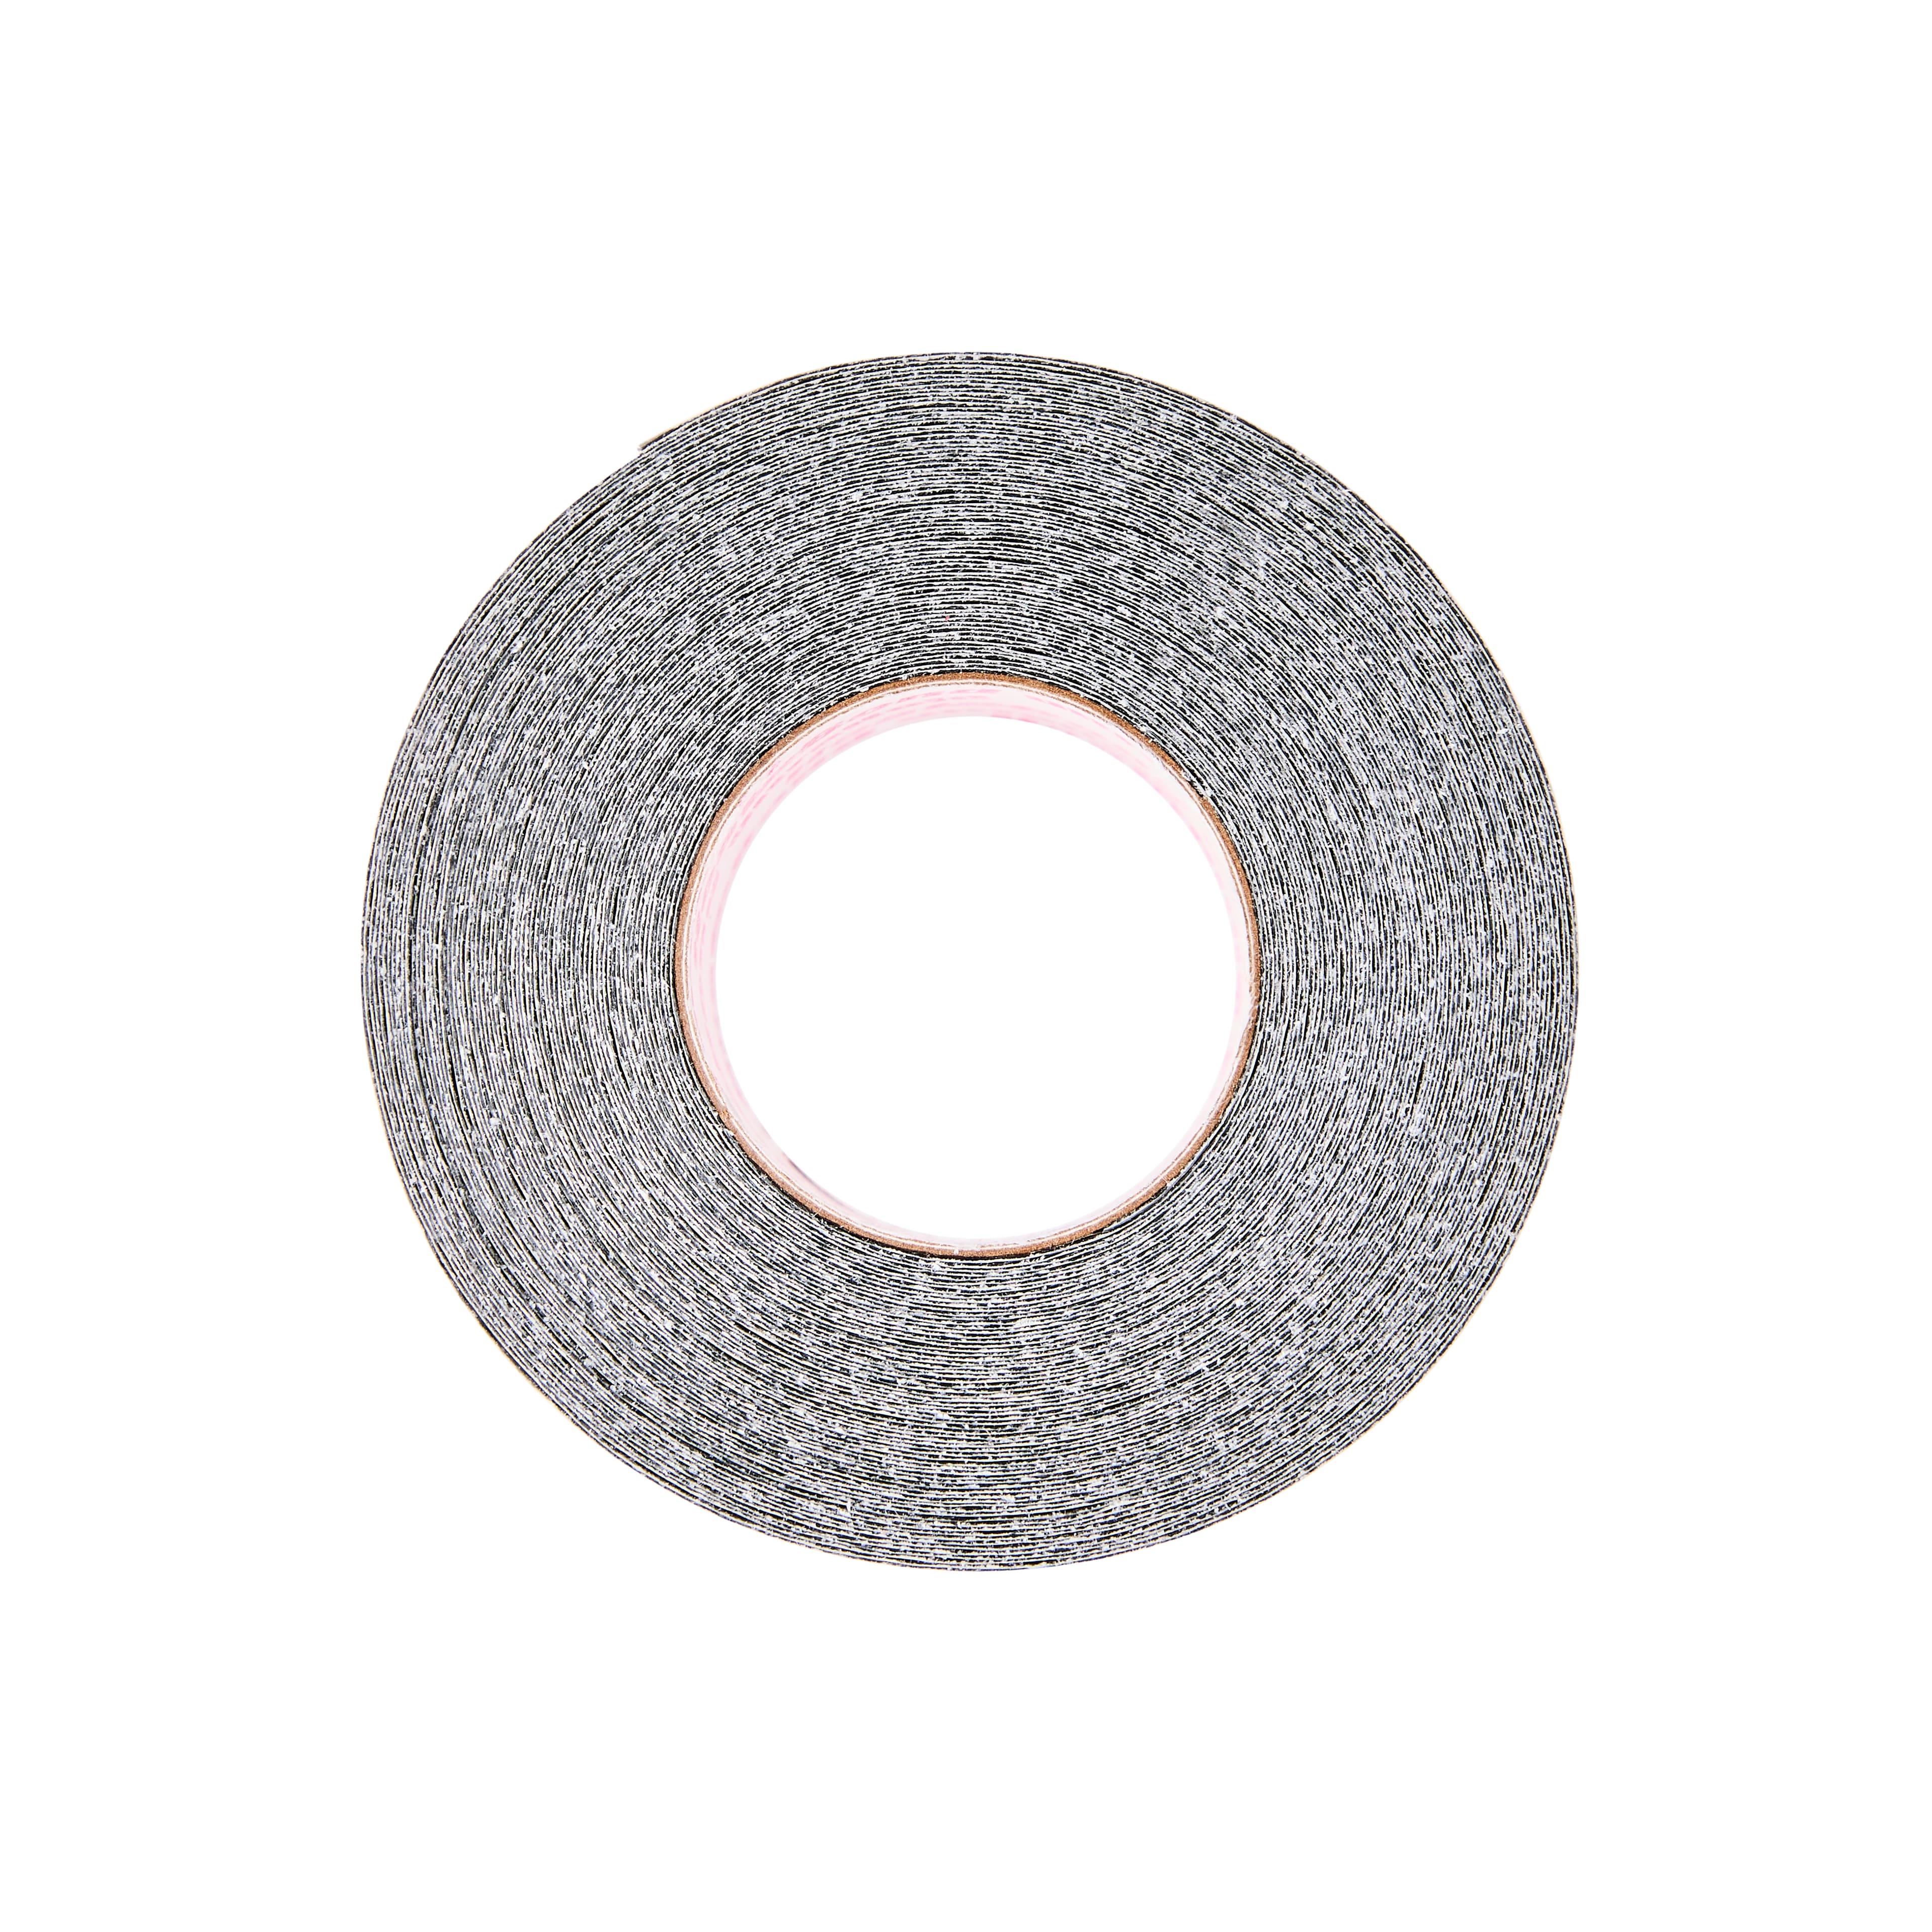 Heat n Bond&#xAE; Dark Fabric Ultrahold Iron-on Adhesive Roll